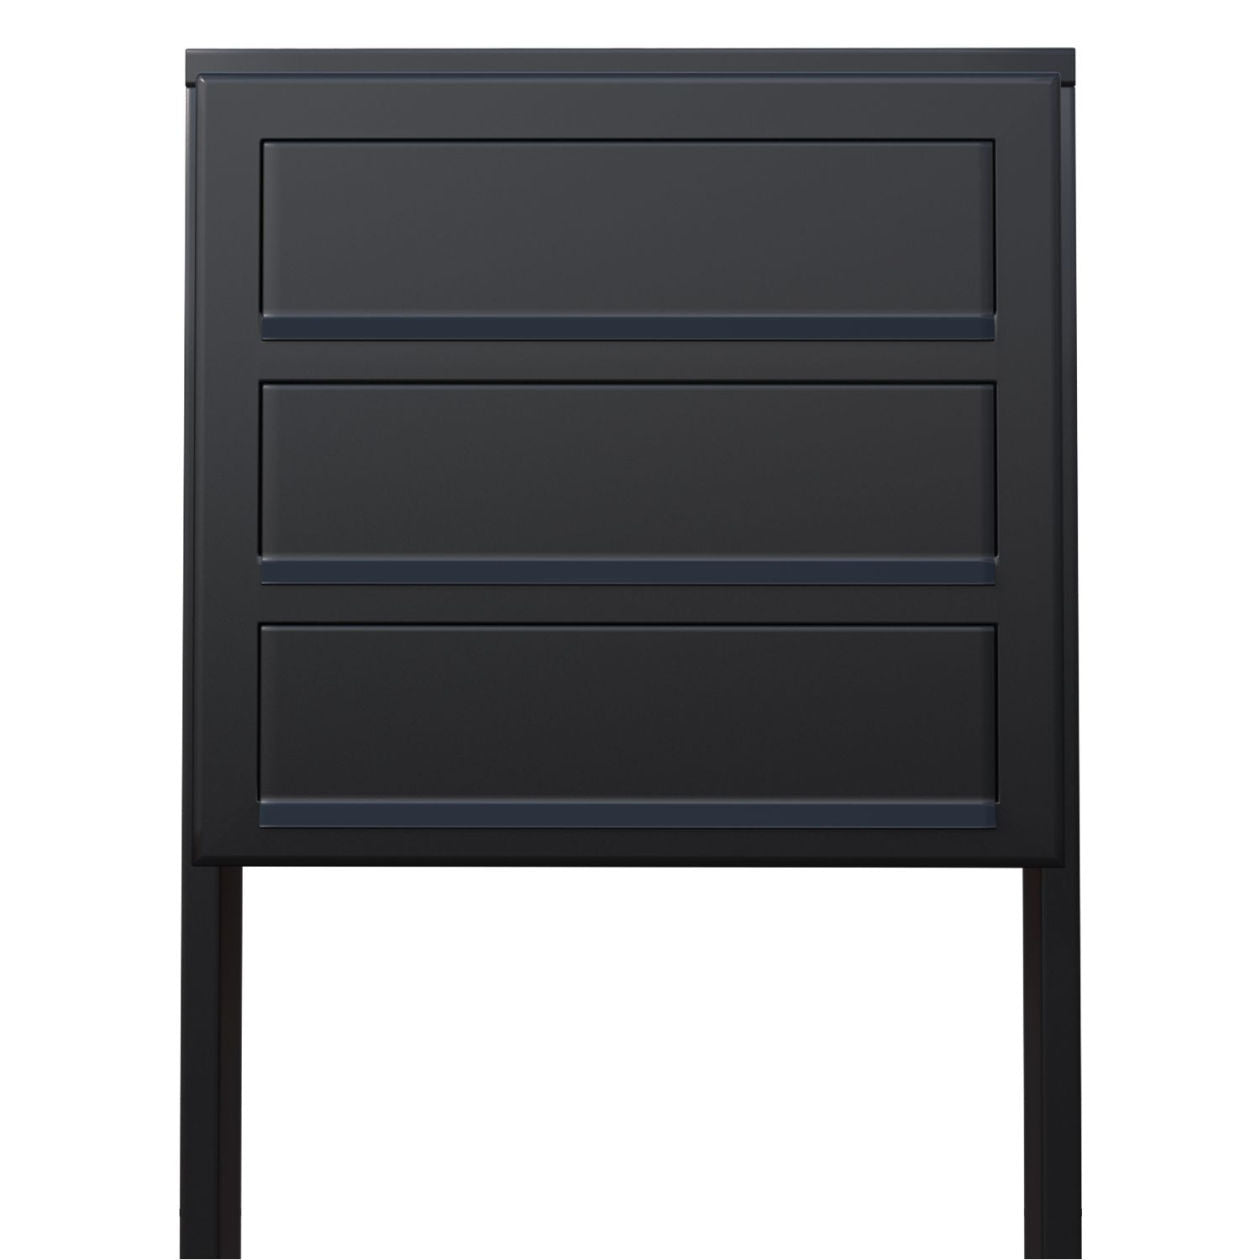 CUBIC 3 Standalone - Multi-unit post-mounted locking mailbox in black